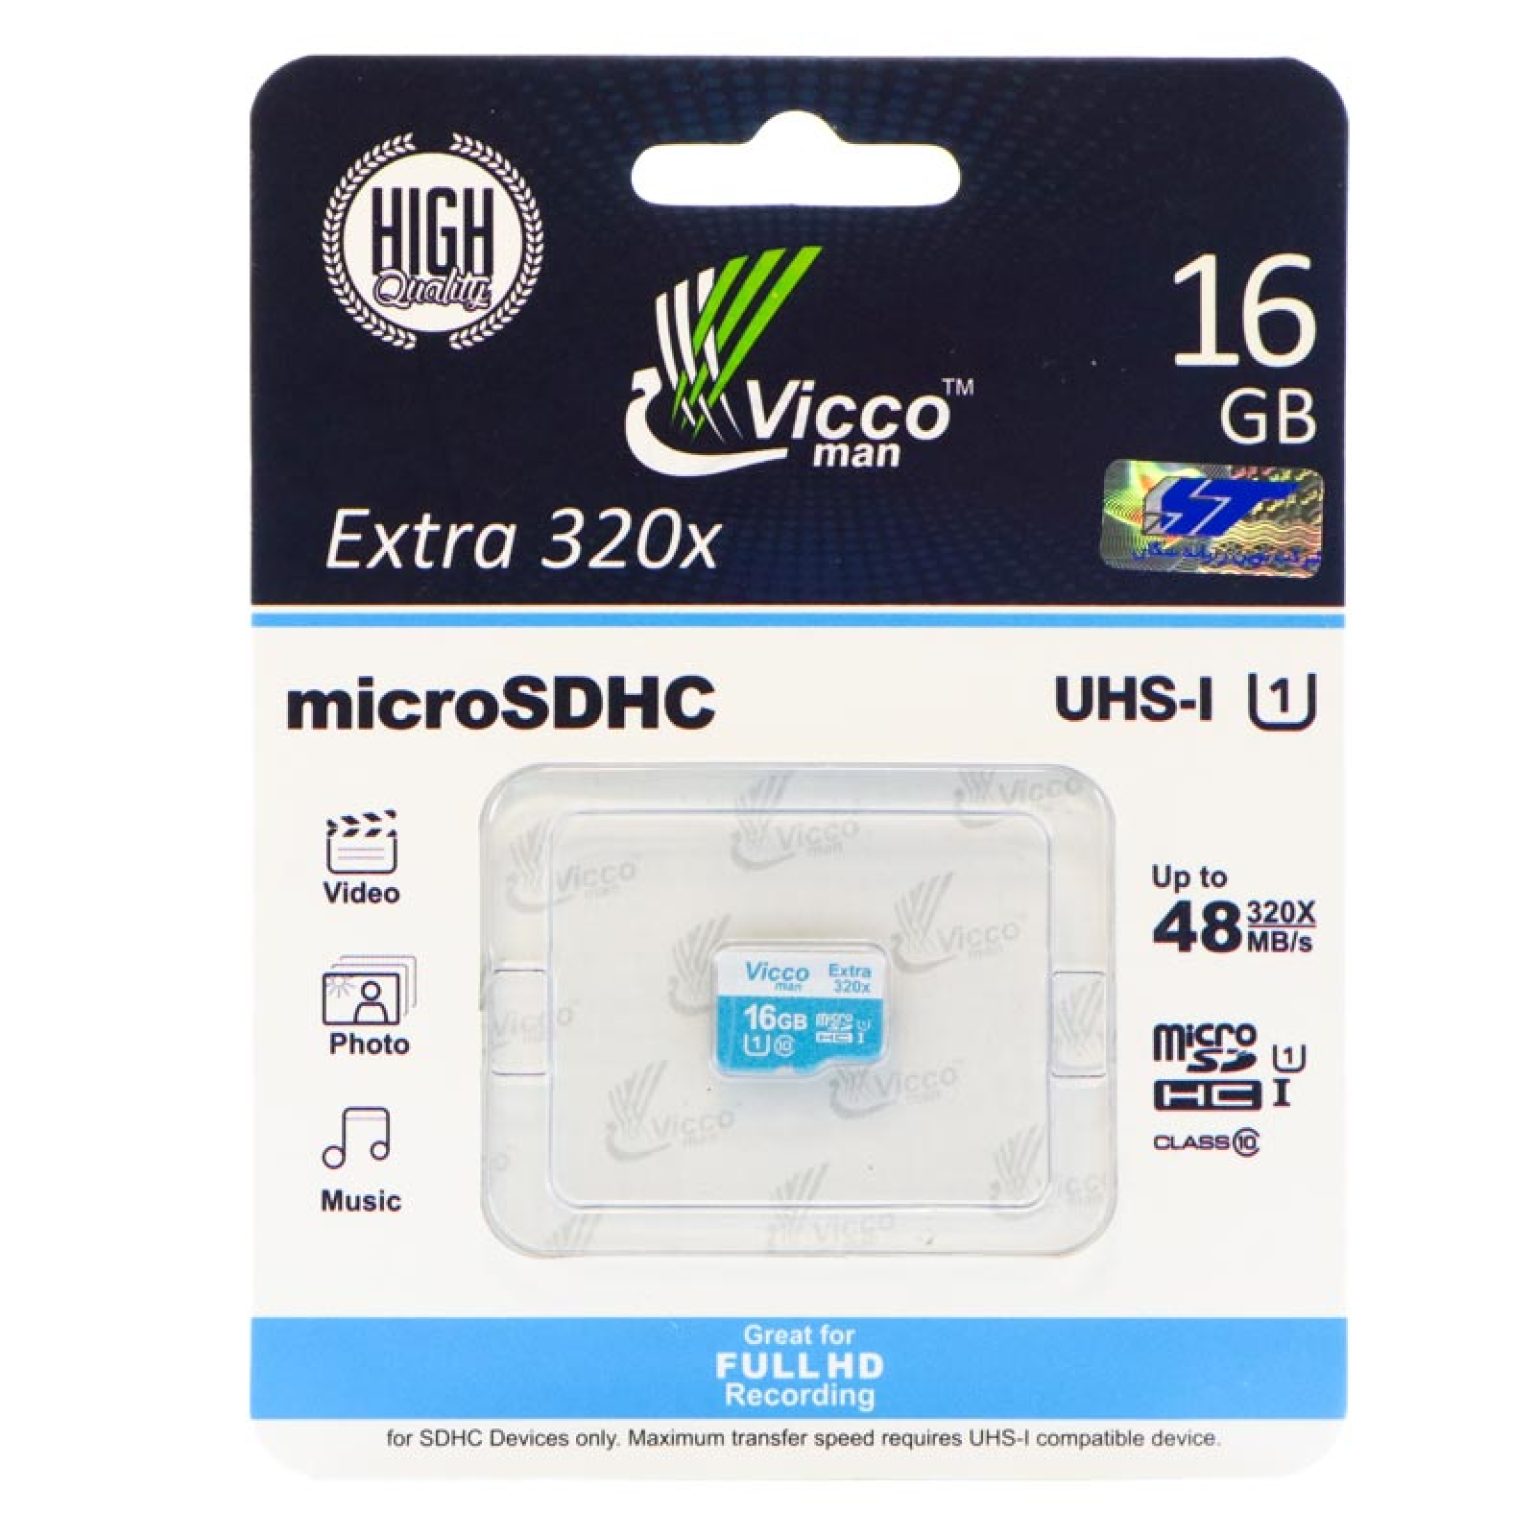 Vicco man microSD Class 10 U1 48MBs 320X 16GB Memory